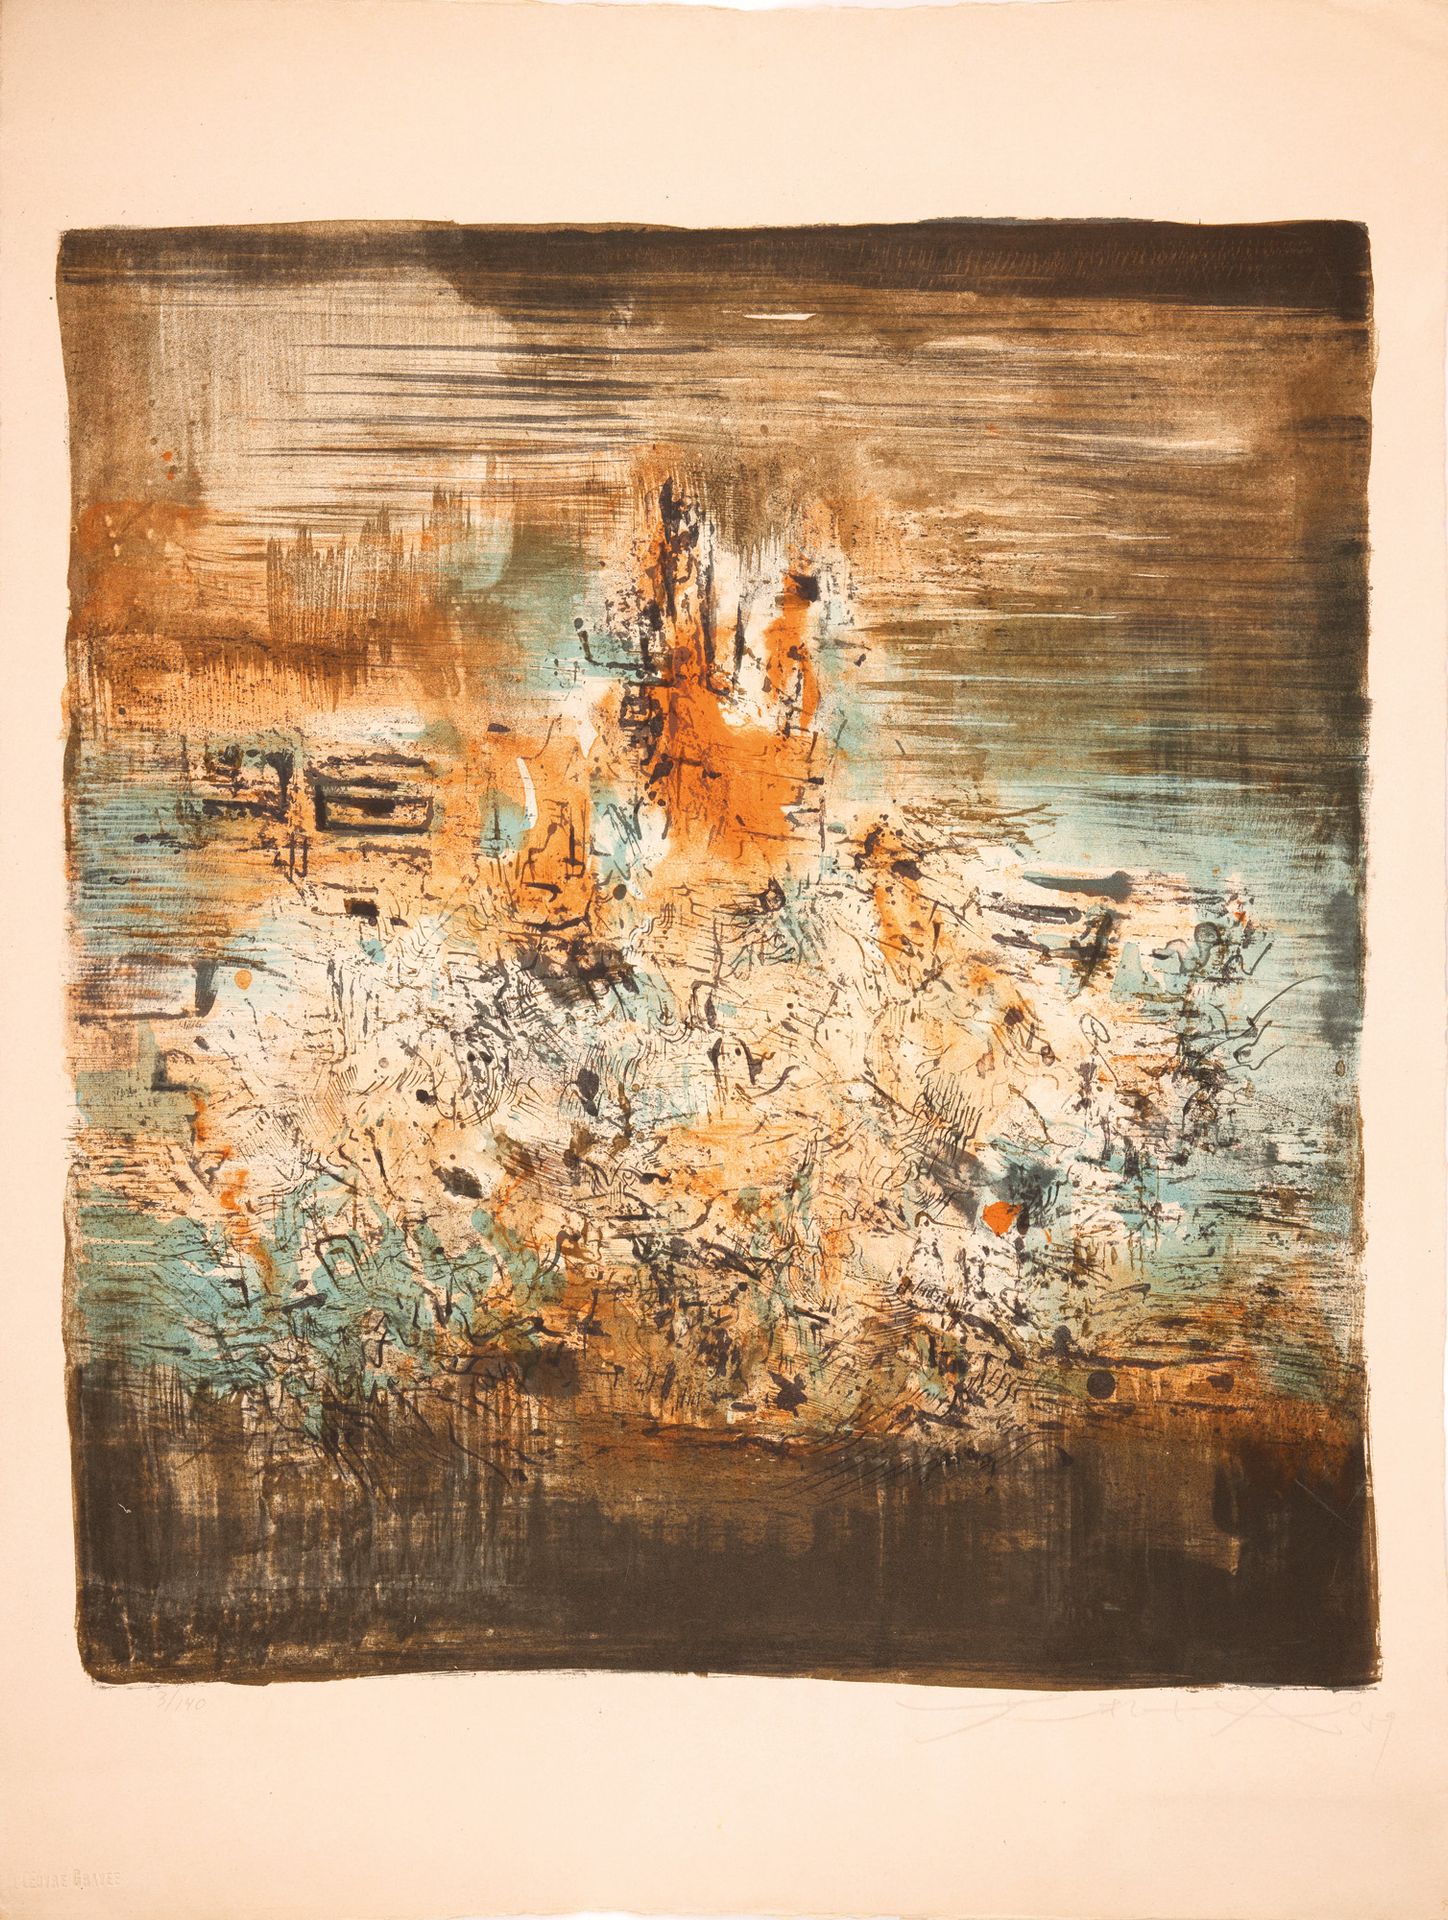 ZAO WOU-KI 赵无极

无题》，1959年。

石版画，50 x 45厘米，边距66 x 50.5厘米（Agerup 121），彩色印刷的精美样张，签名&hellip;